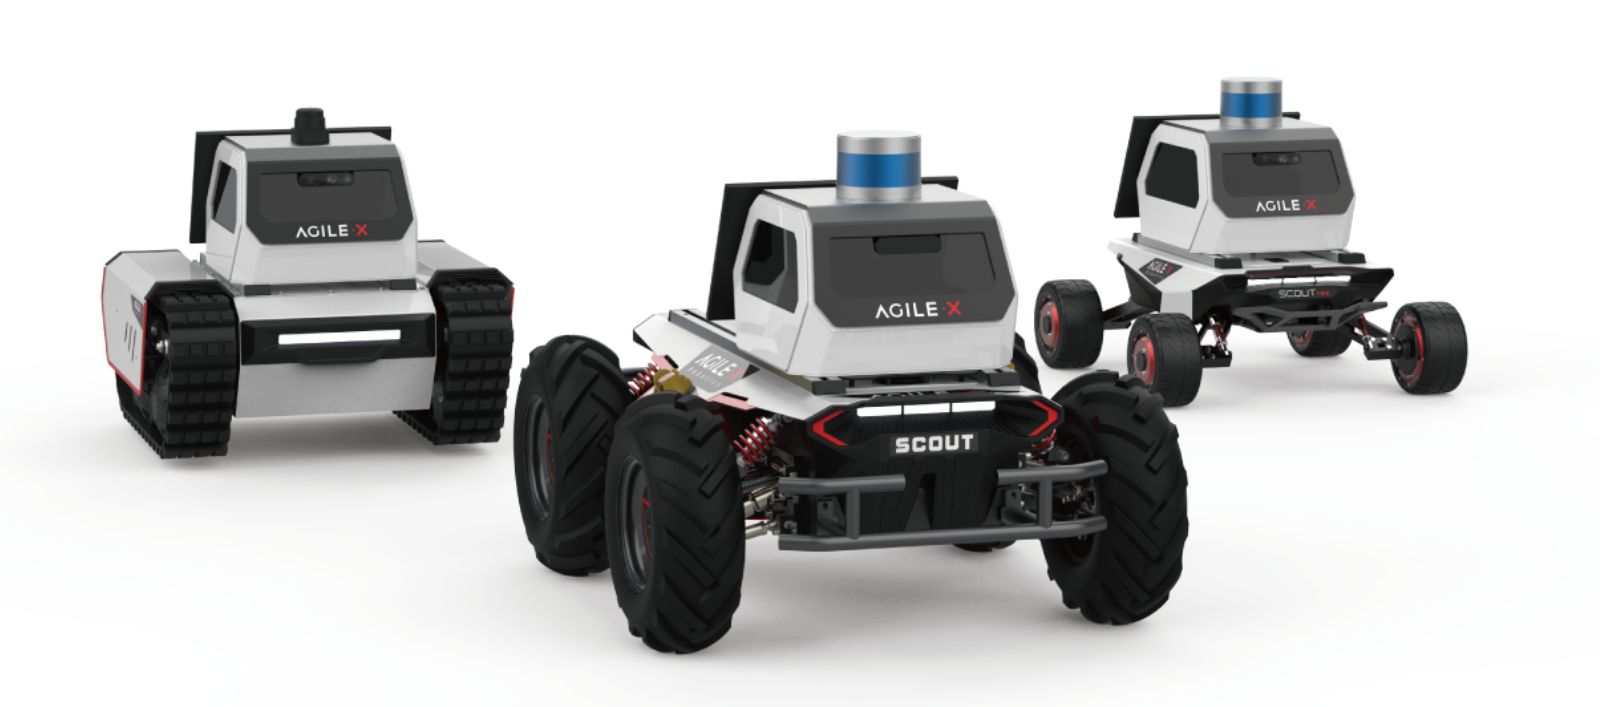 Robot AgileX kit autopilot kit navigation